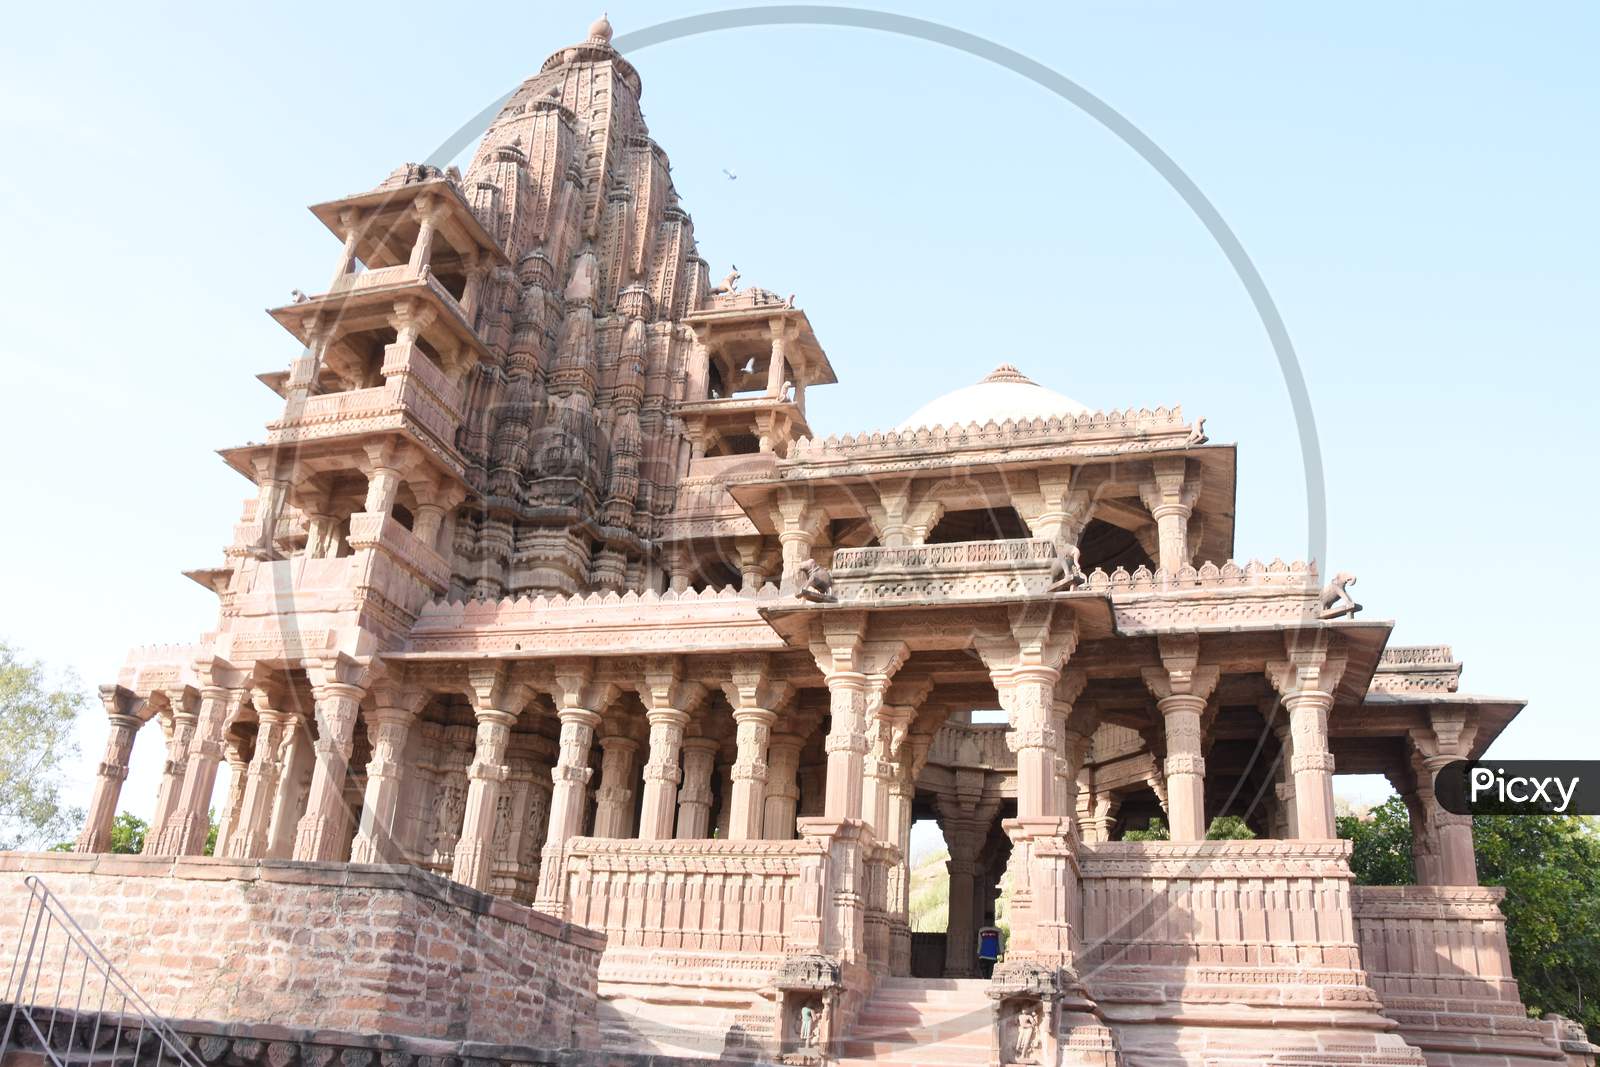 Mausoleum built in Mandor Garden of Raja and Maharaja in Jodhpur city